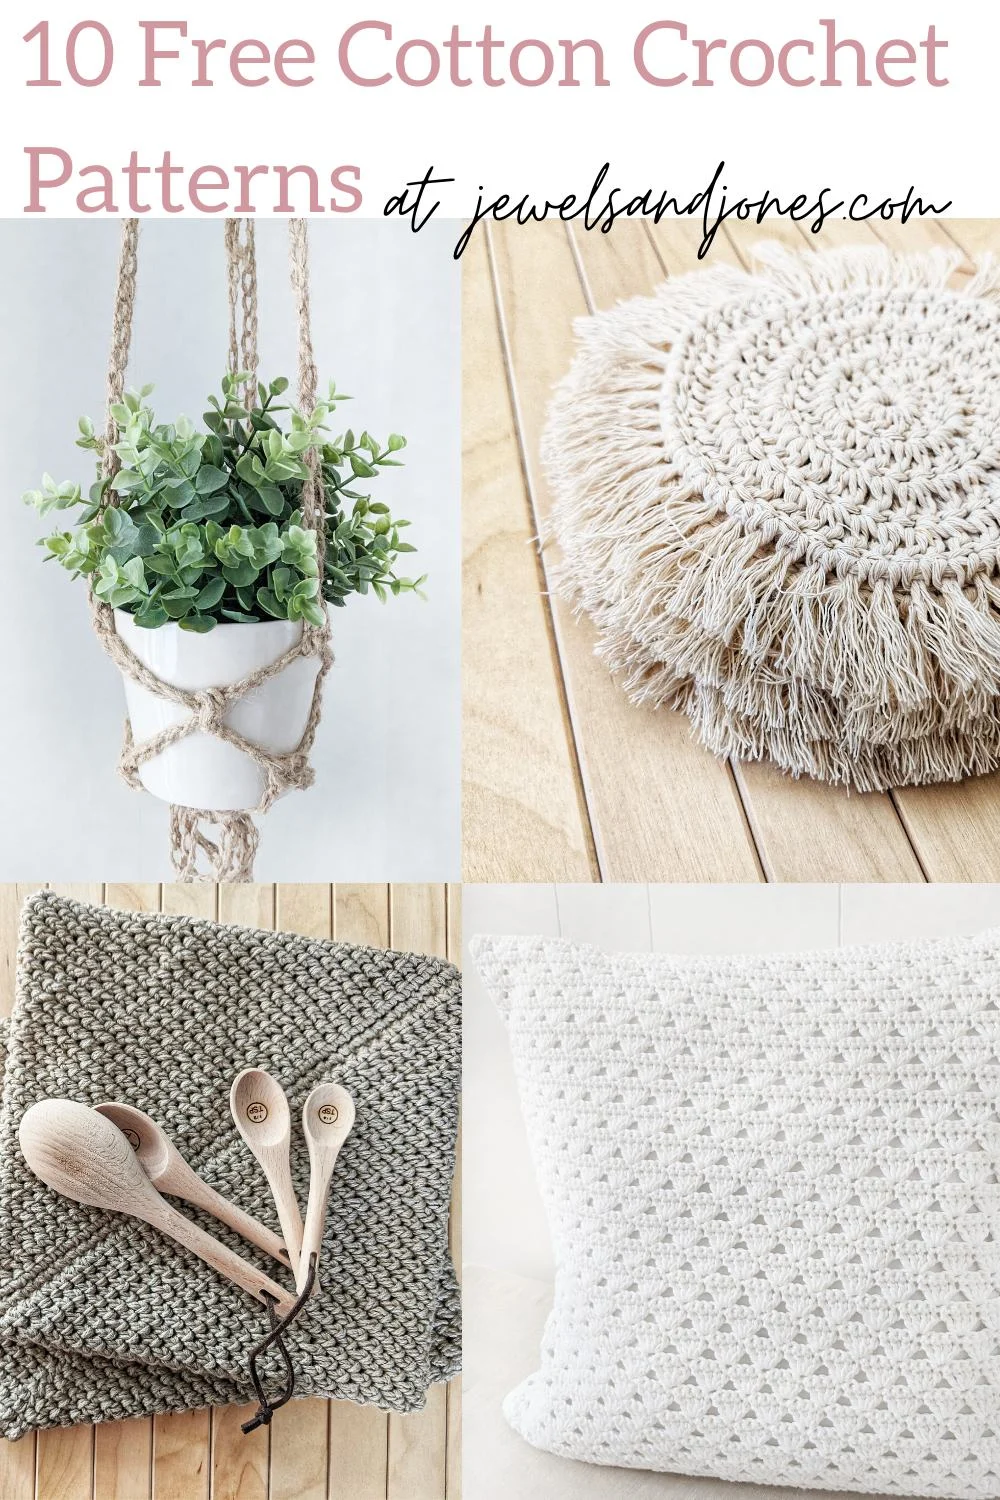 10 free cotton crochet patterns